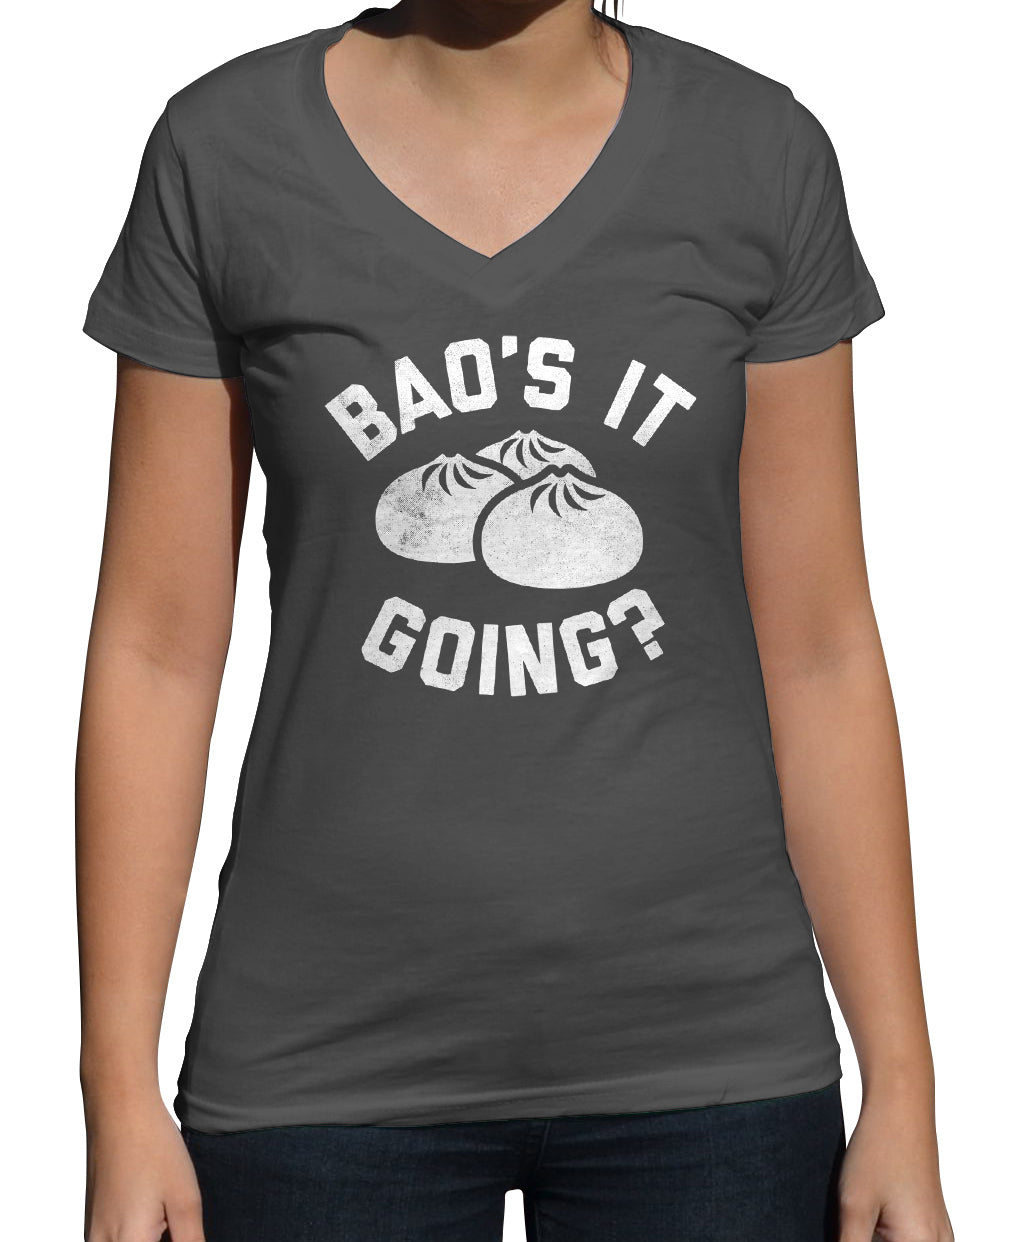 Women's Bao's It Going Dim Sum Vneck T-Shirt